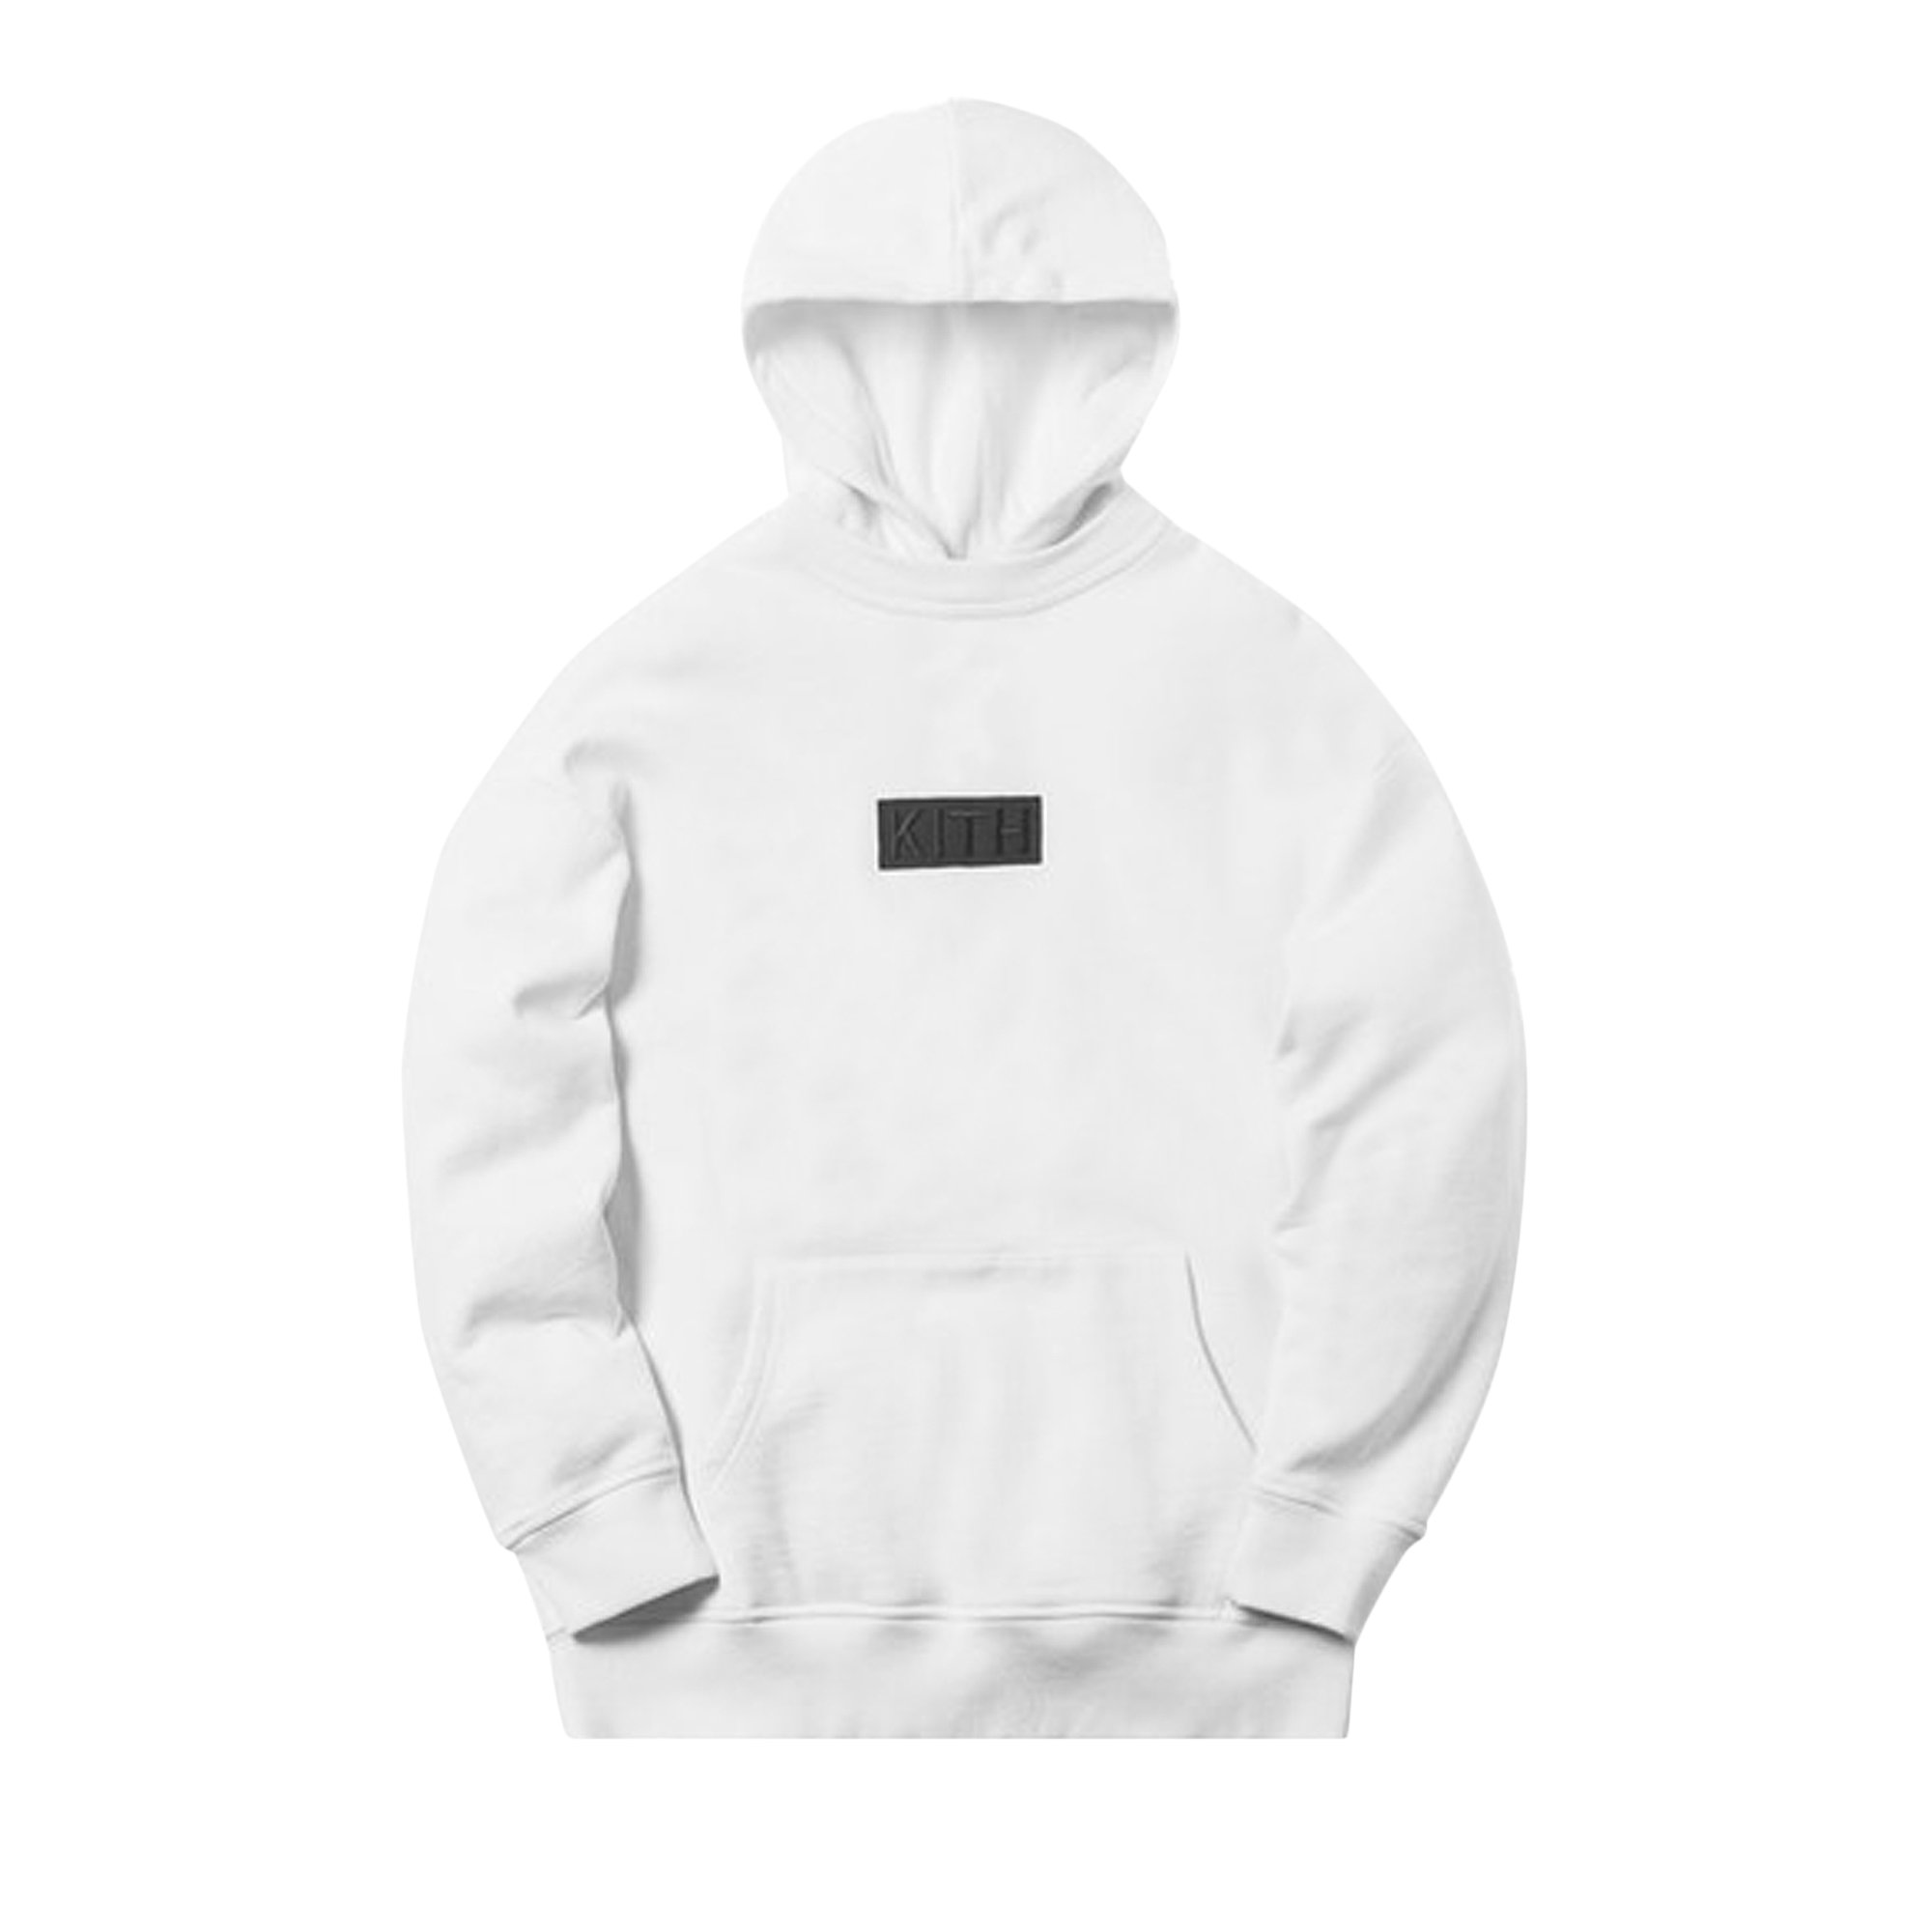 特価先着順！KITH classic logo hoodie white L